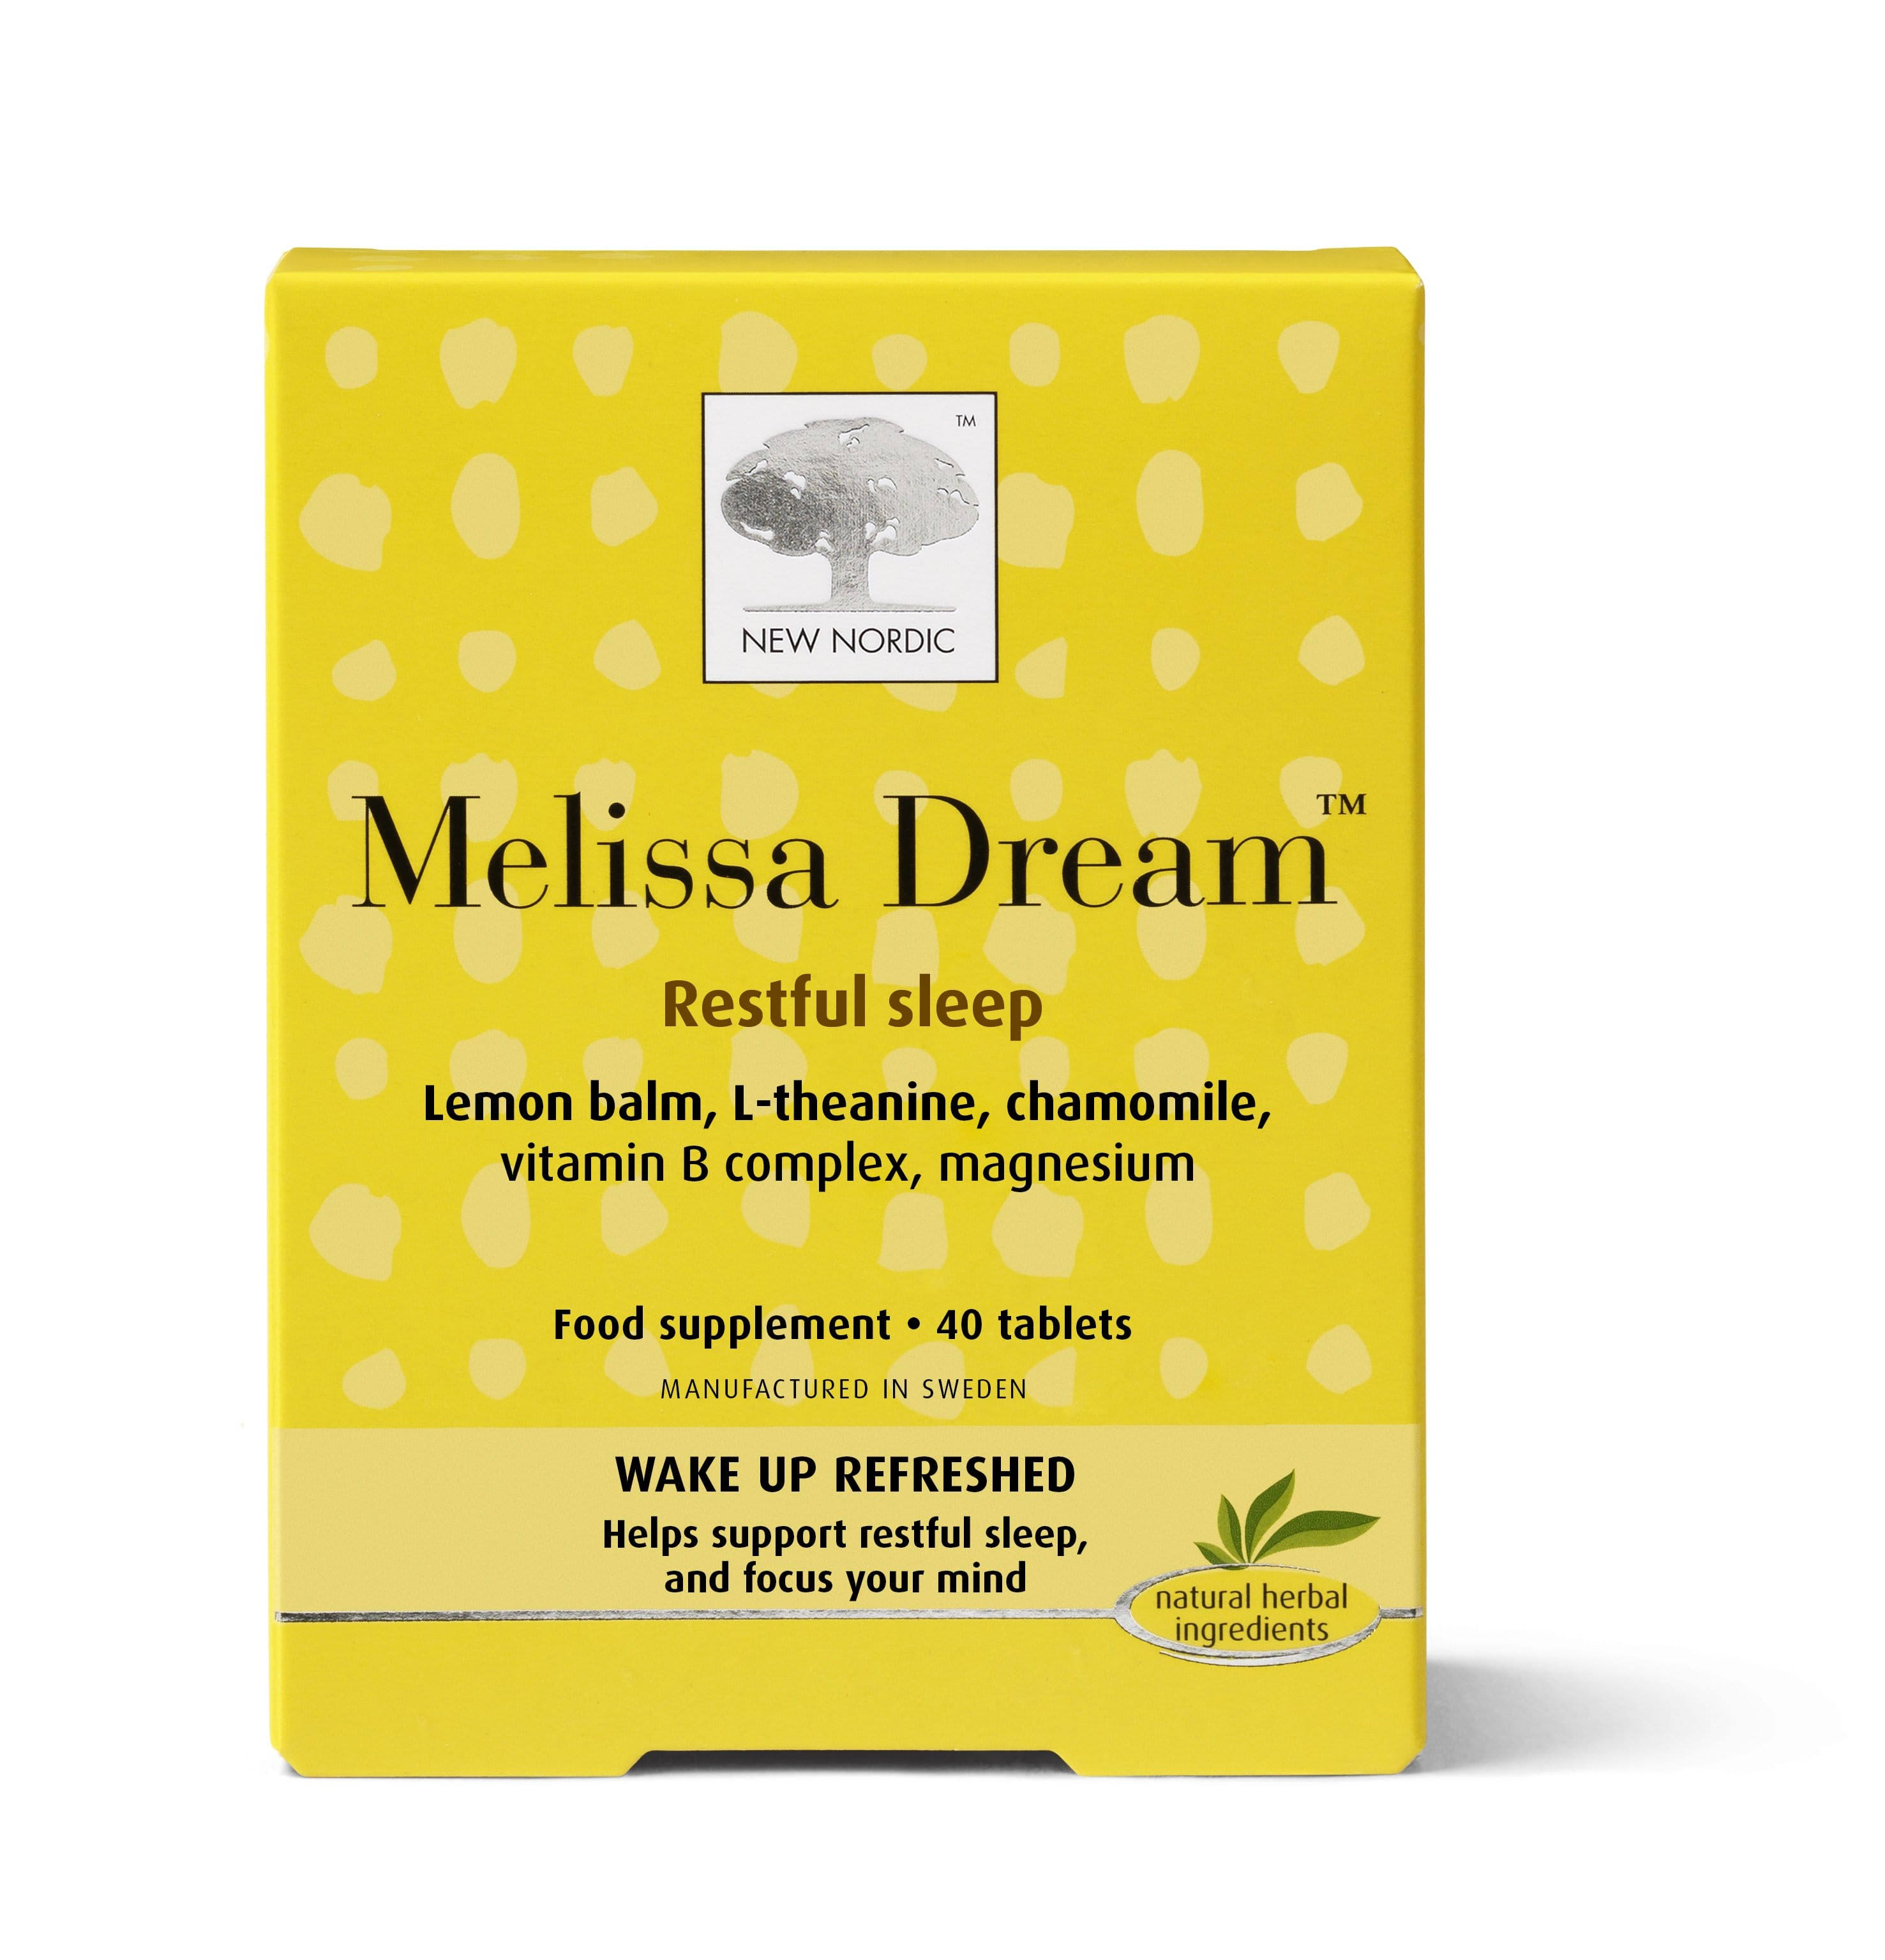 New Nordic Melissa Dream Food Supplement - 40 Tablets